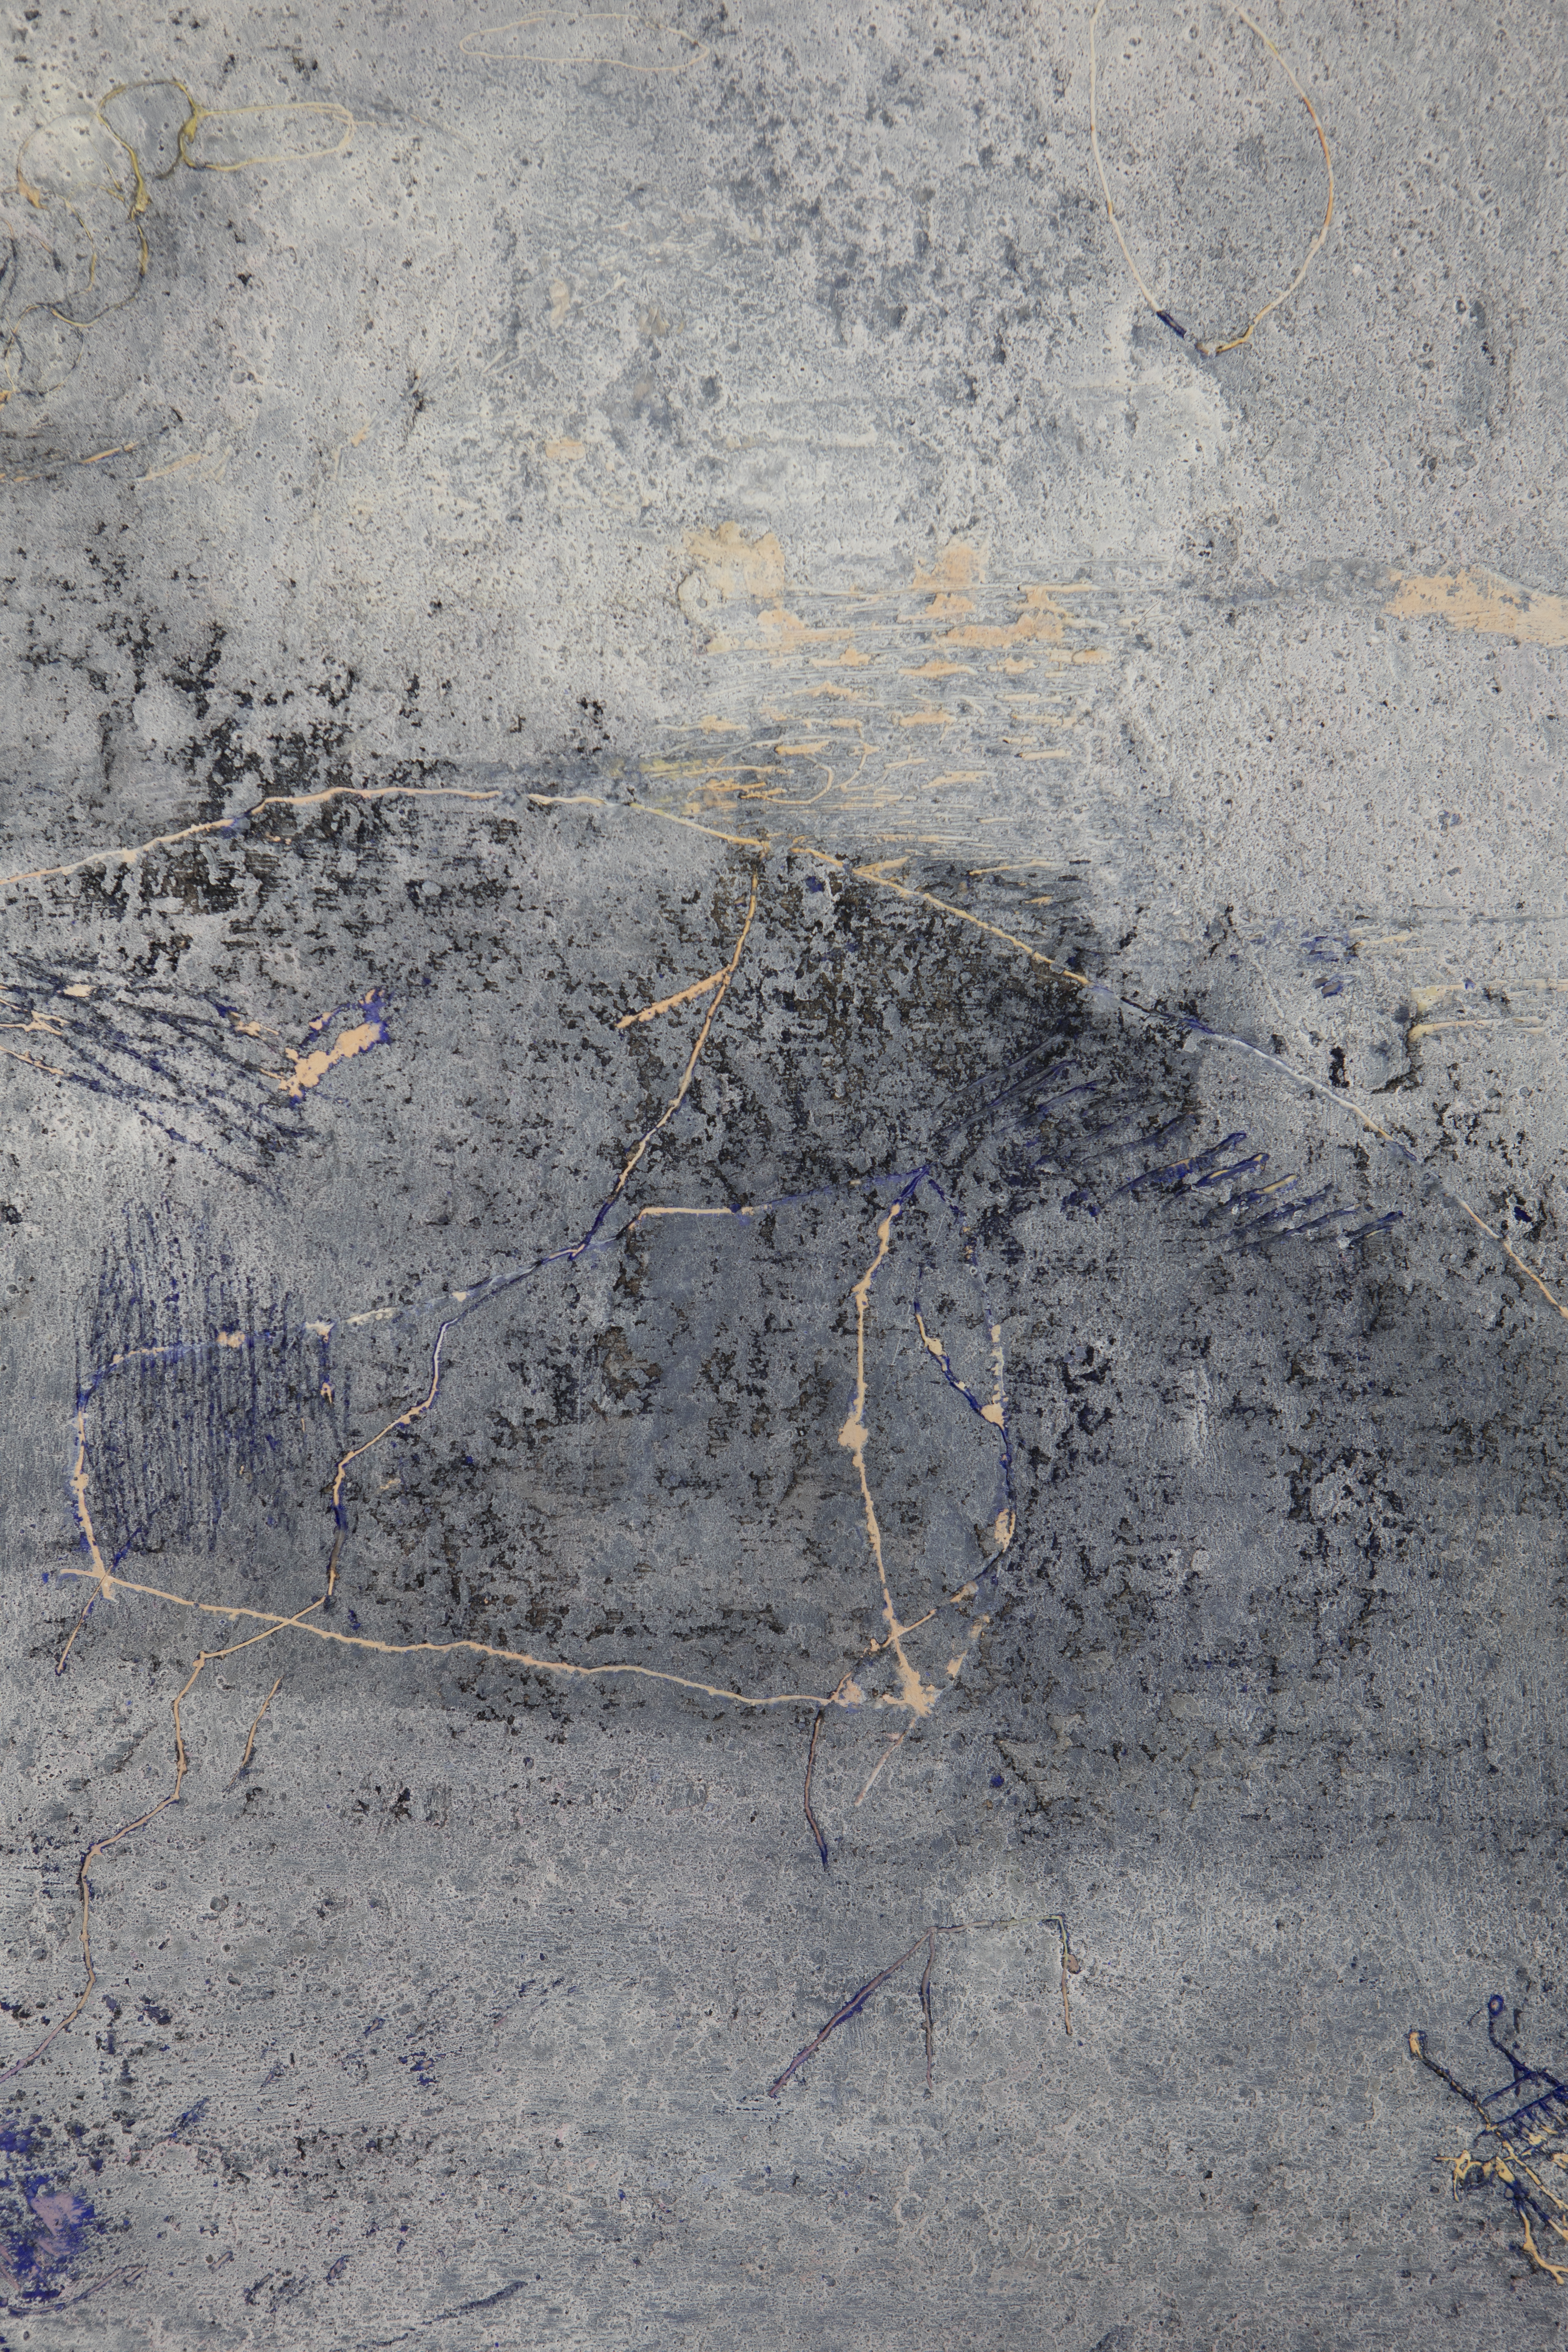 Karolina Glusiec, Portrait of a Silver Fish / Landscape from Deptford Creek, 2021 (detail)